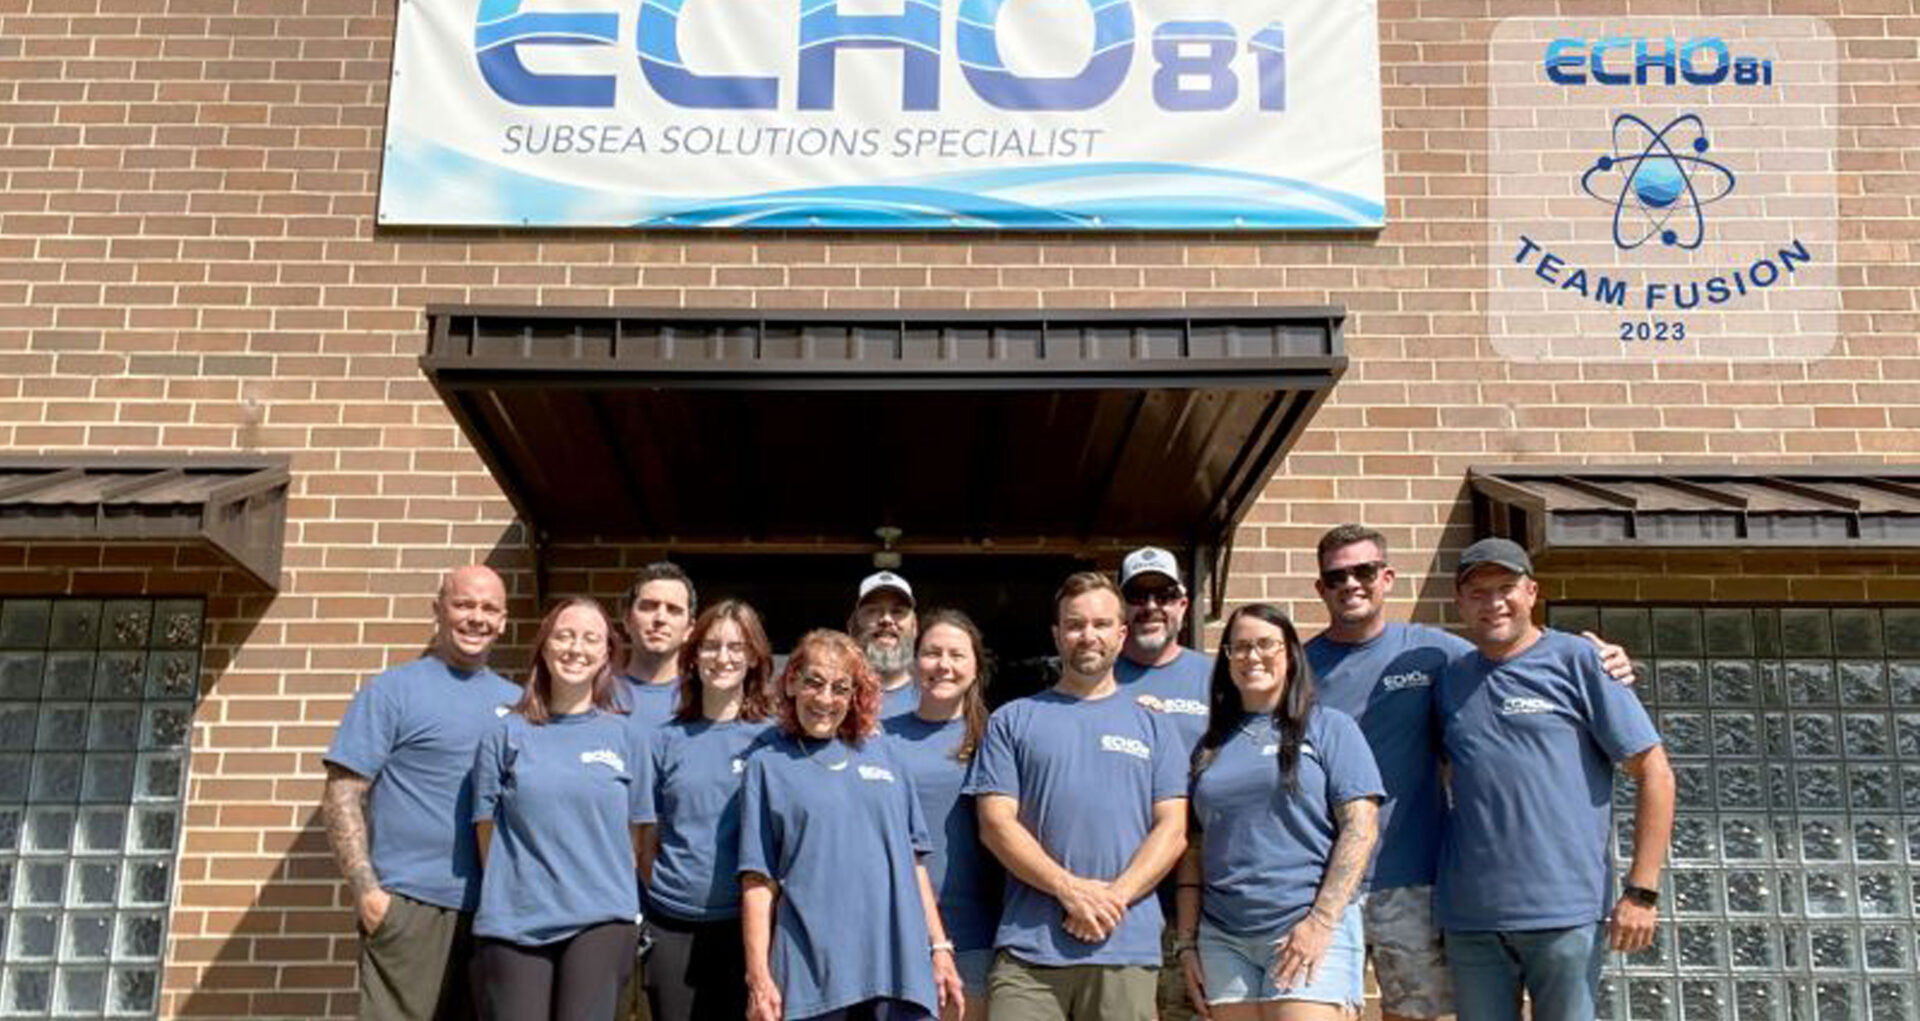 ECHO81 Team Fusion 2023. ECHO81 is Premier Supplier of Underwater Survey Technologies Rental Sales Training Offshore Hydrography Geophysics.